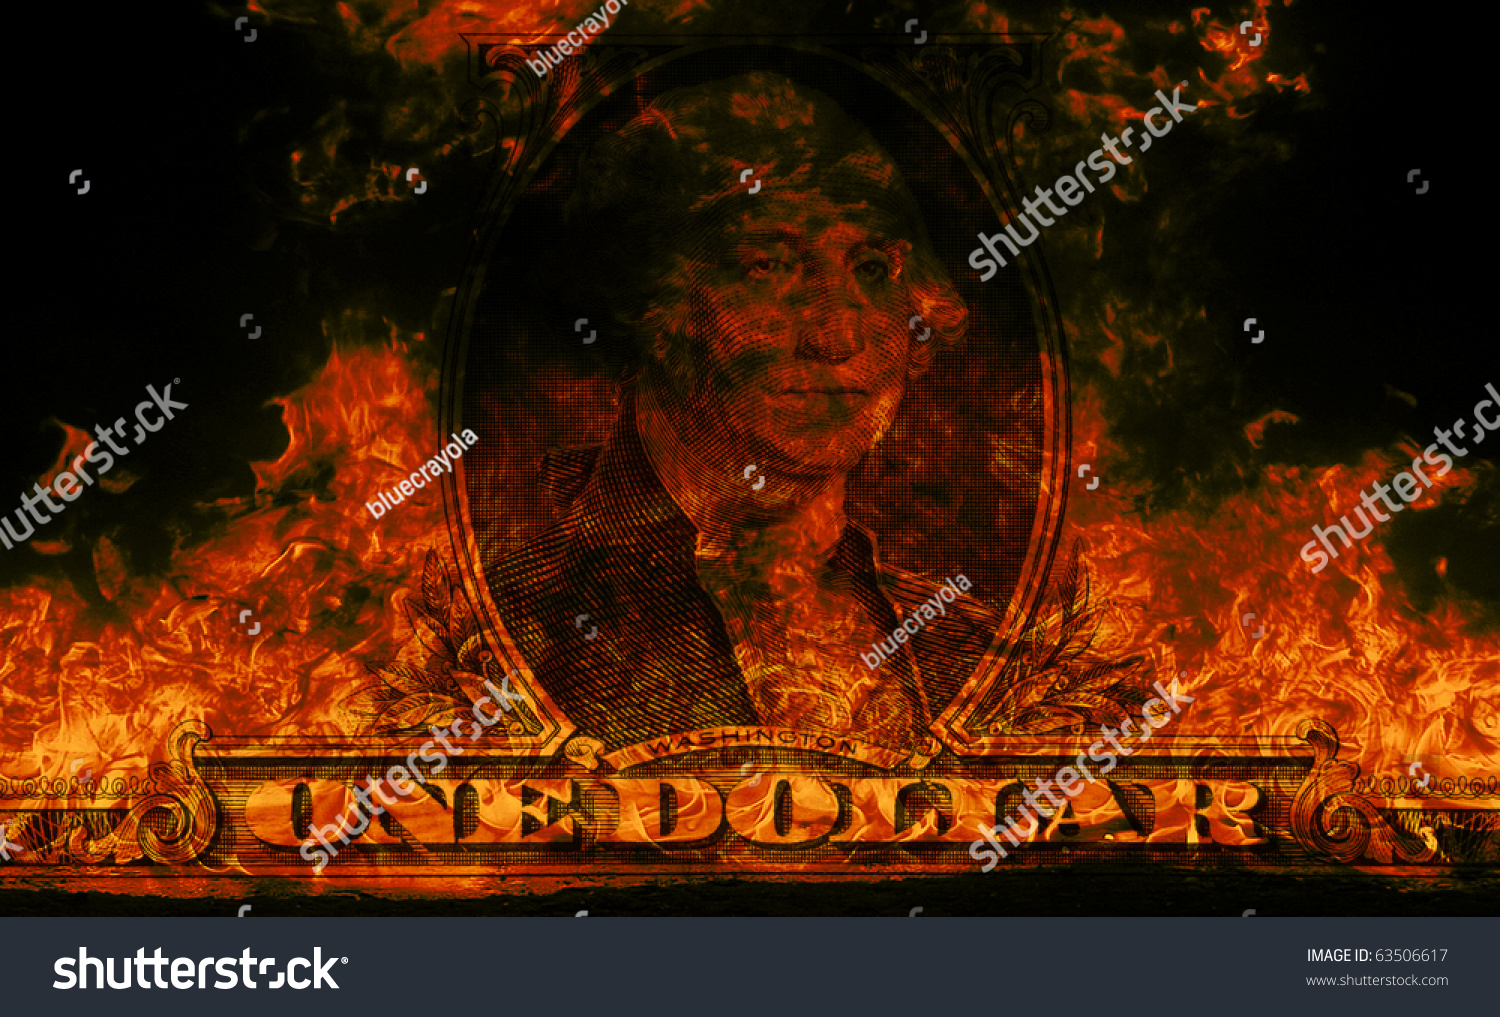 Digital visualization of a burning dollars #63506617